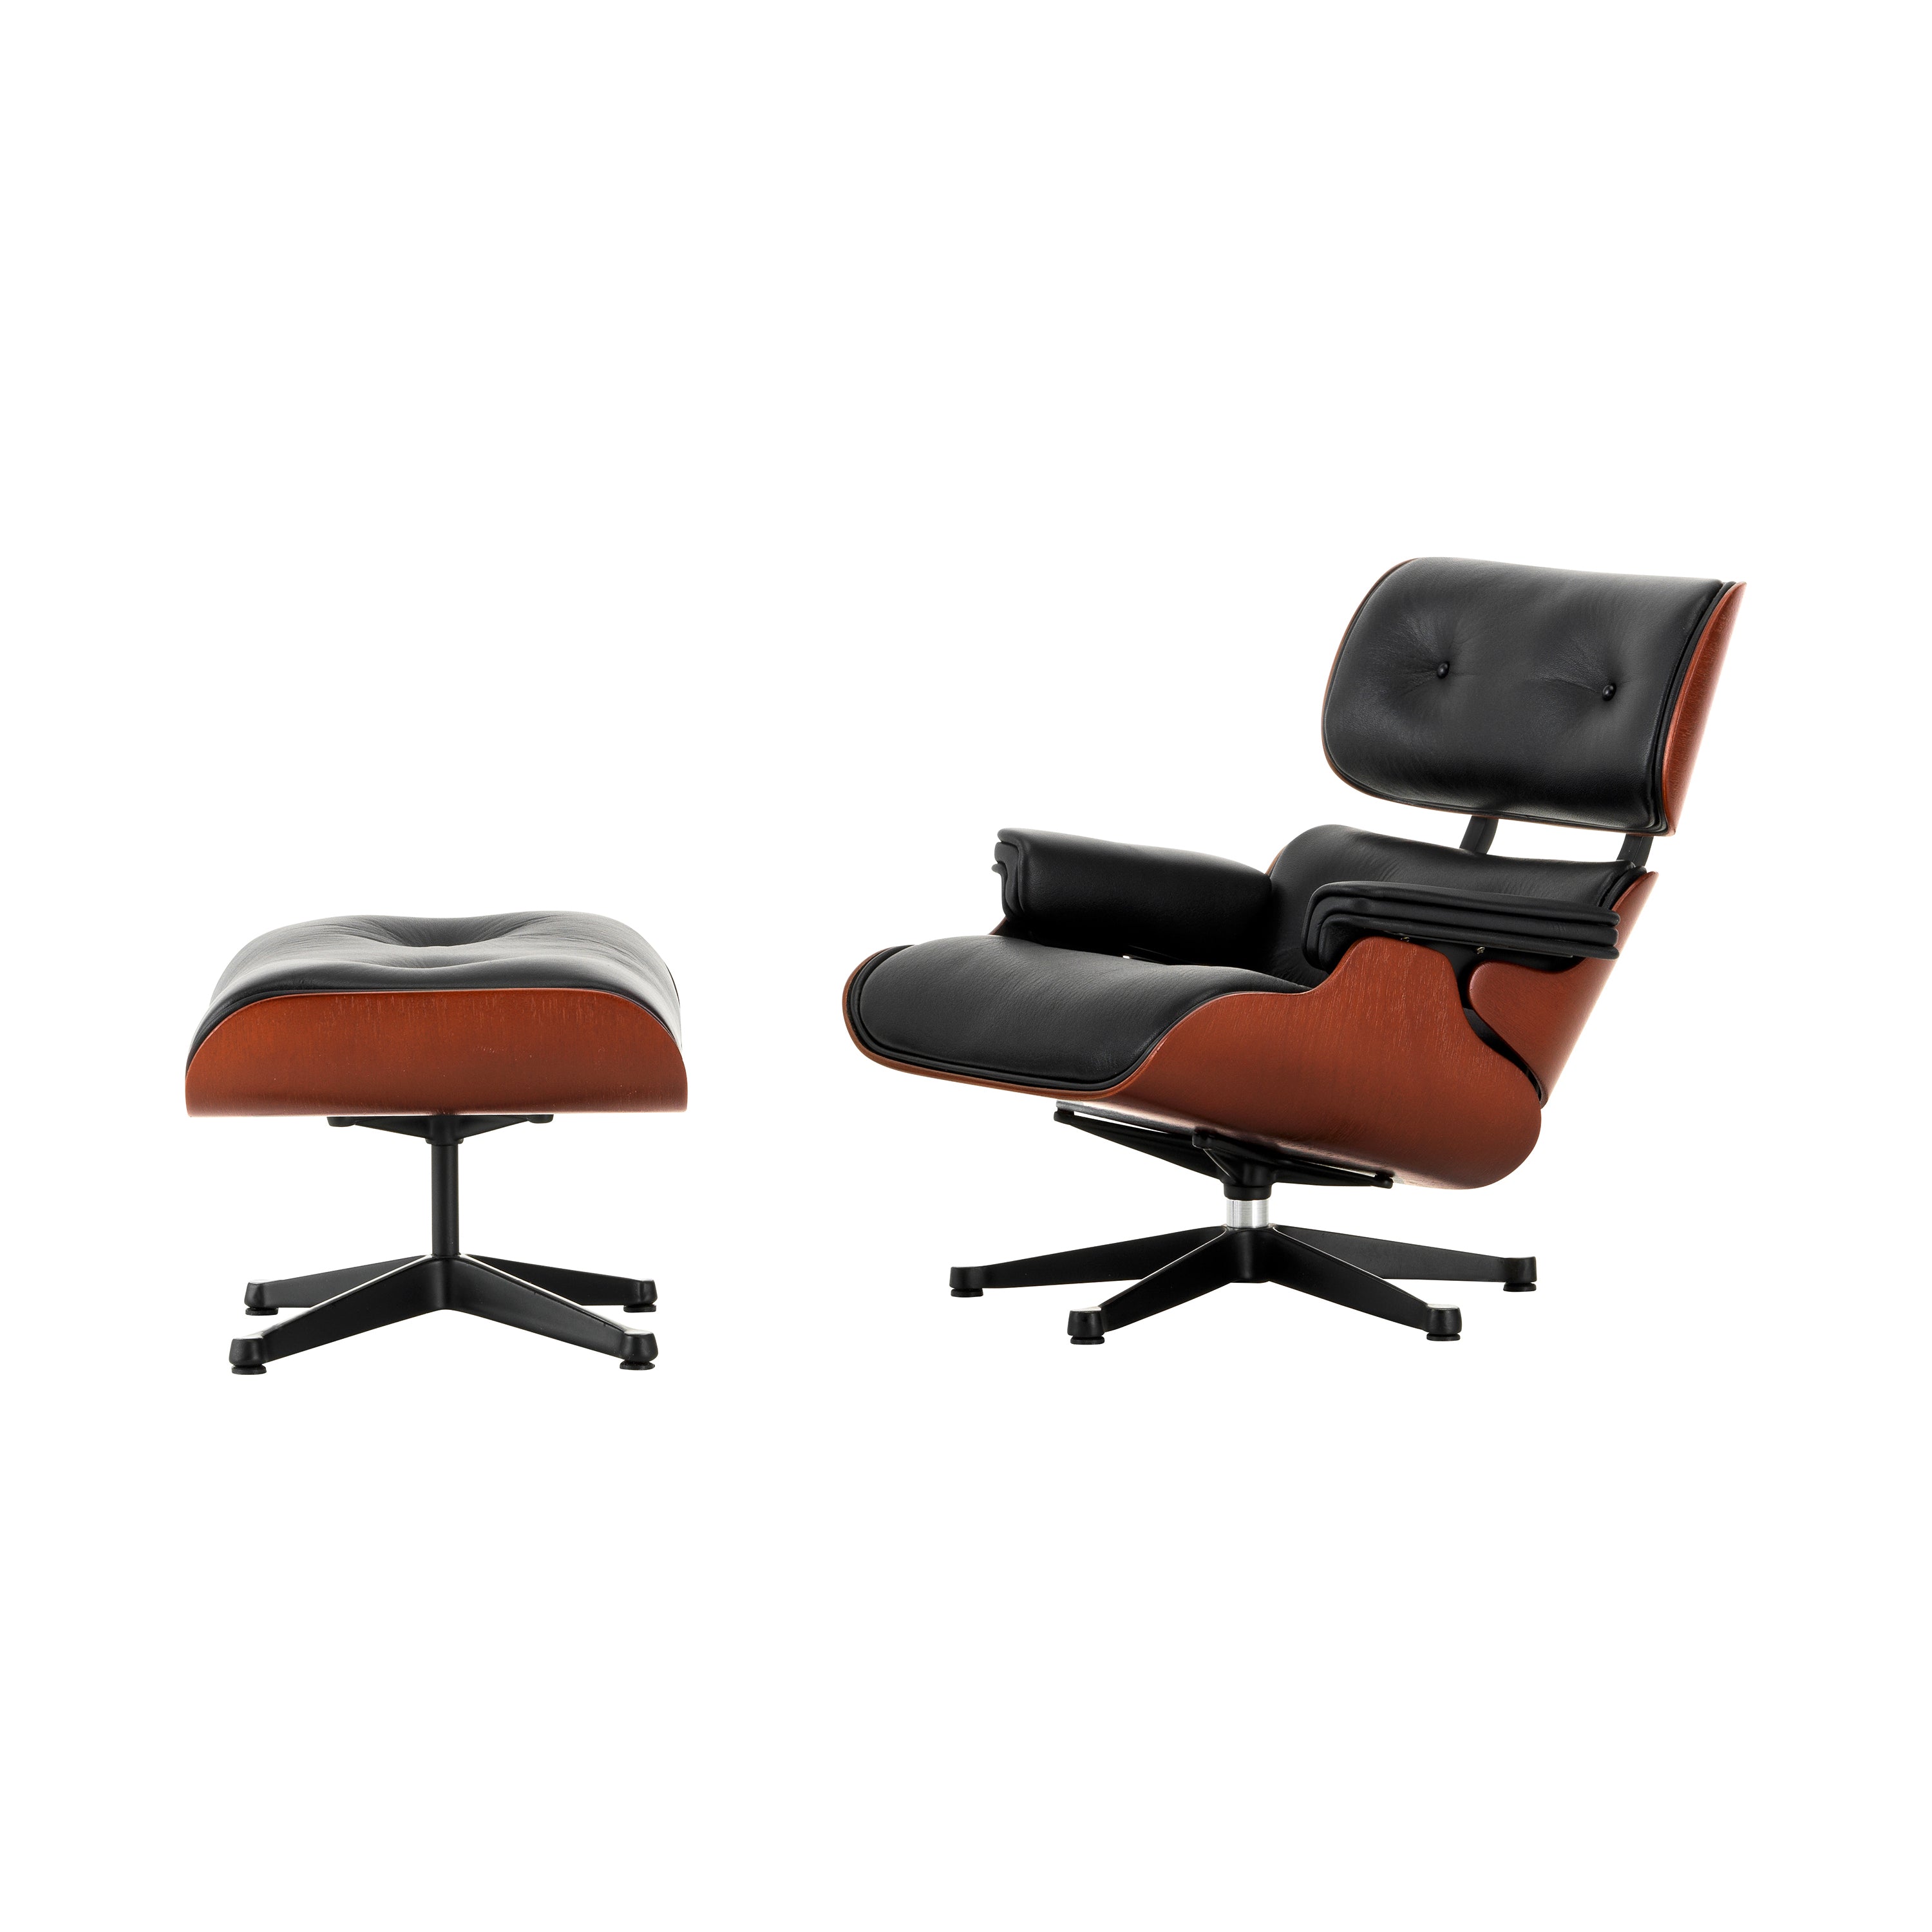 Vitra Lounge Chair and Ottoman - 2Modern